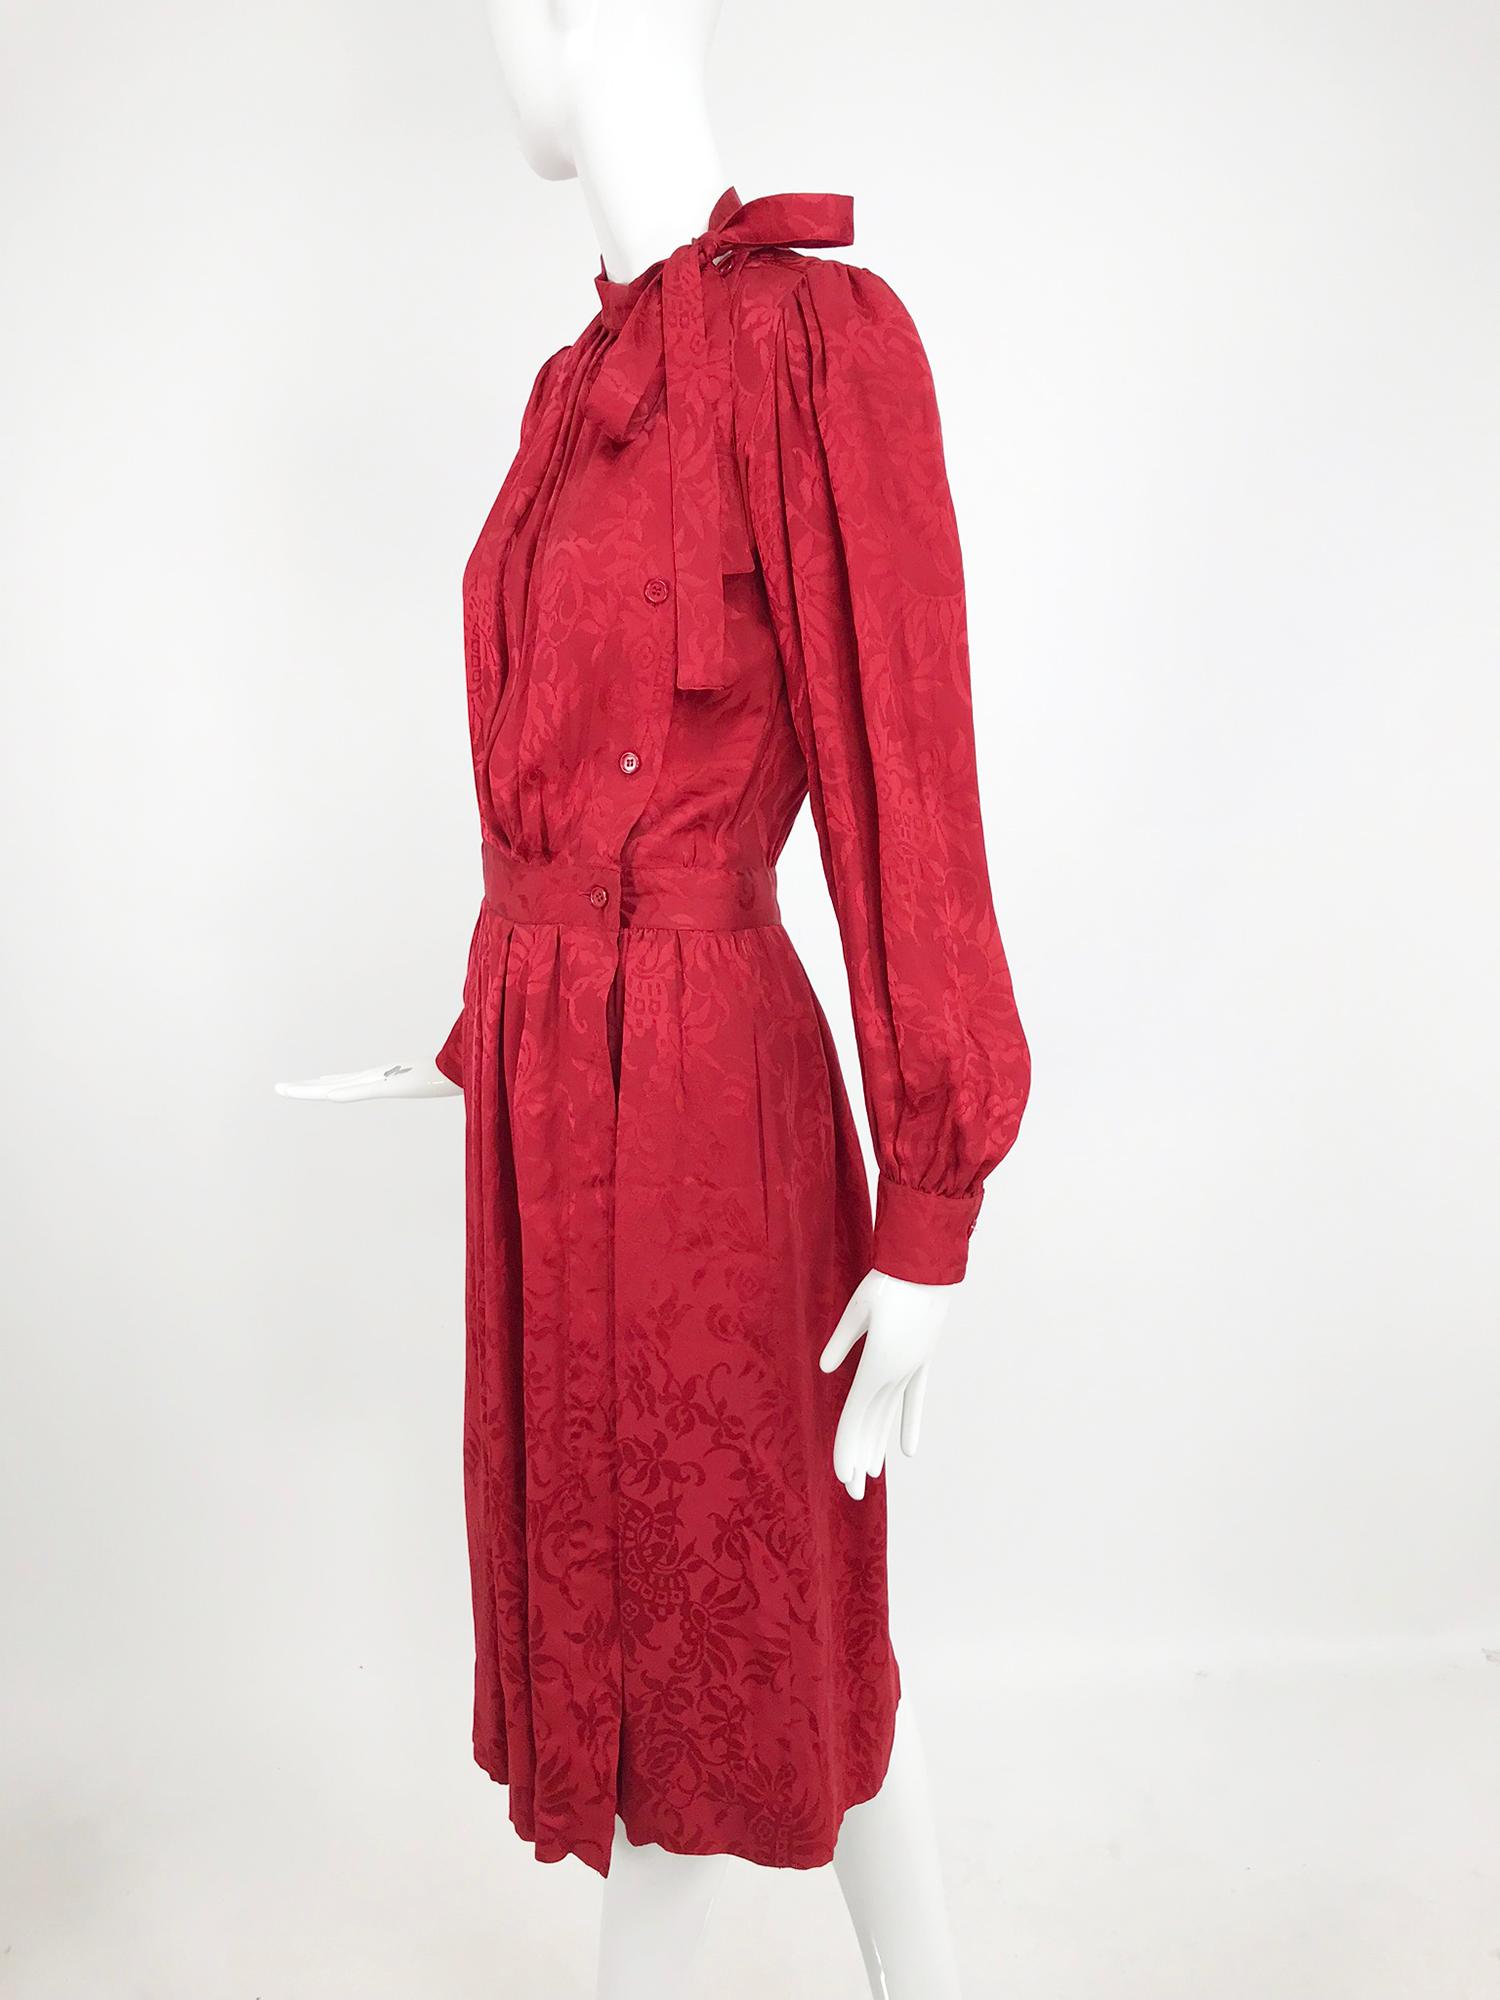 Yves Saint Laurent Red Silk Jacquard Bow Tie Dress 1970s 10